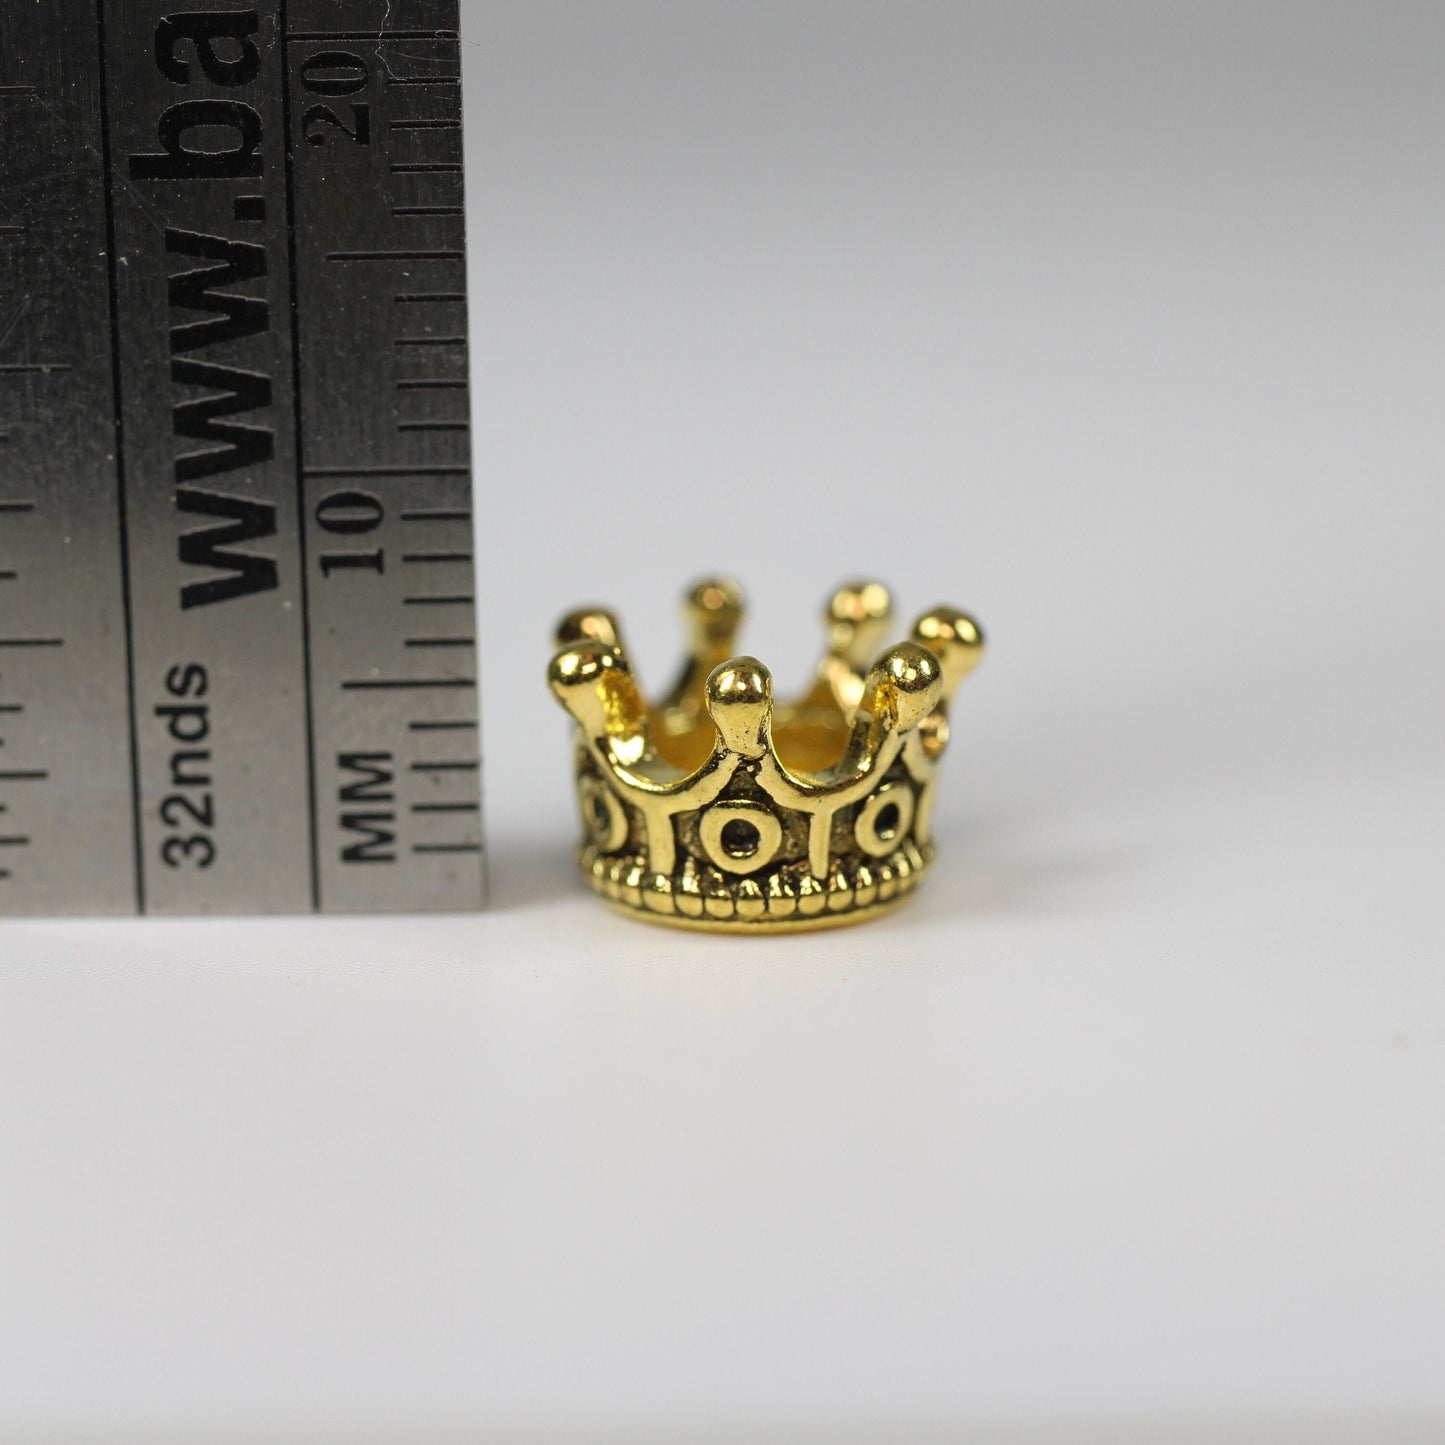 Gold Crown Dreadlock Bead - 5mm bead hole - Large Hole Beads for Jewelry, Flower dread bead, Hair, Braids, Dreadlocks, metal dread bead